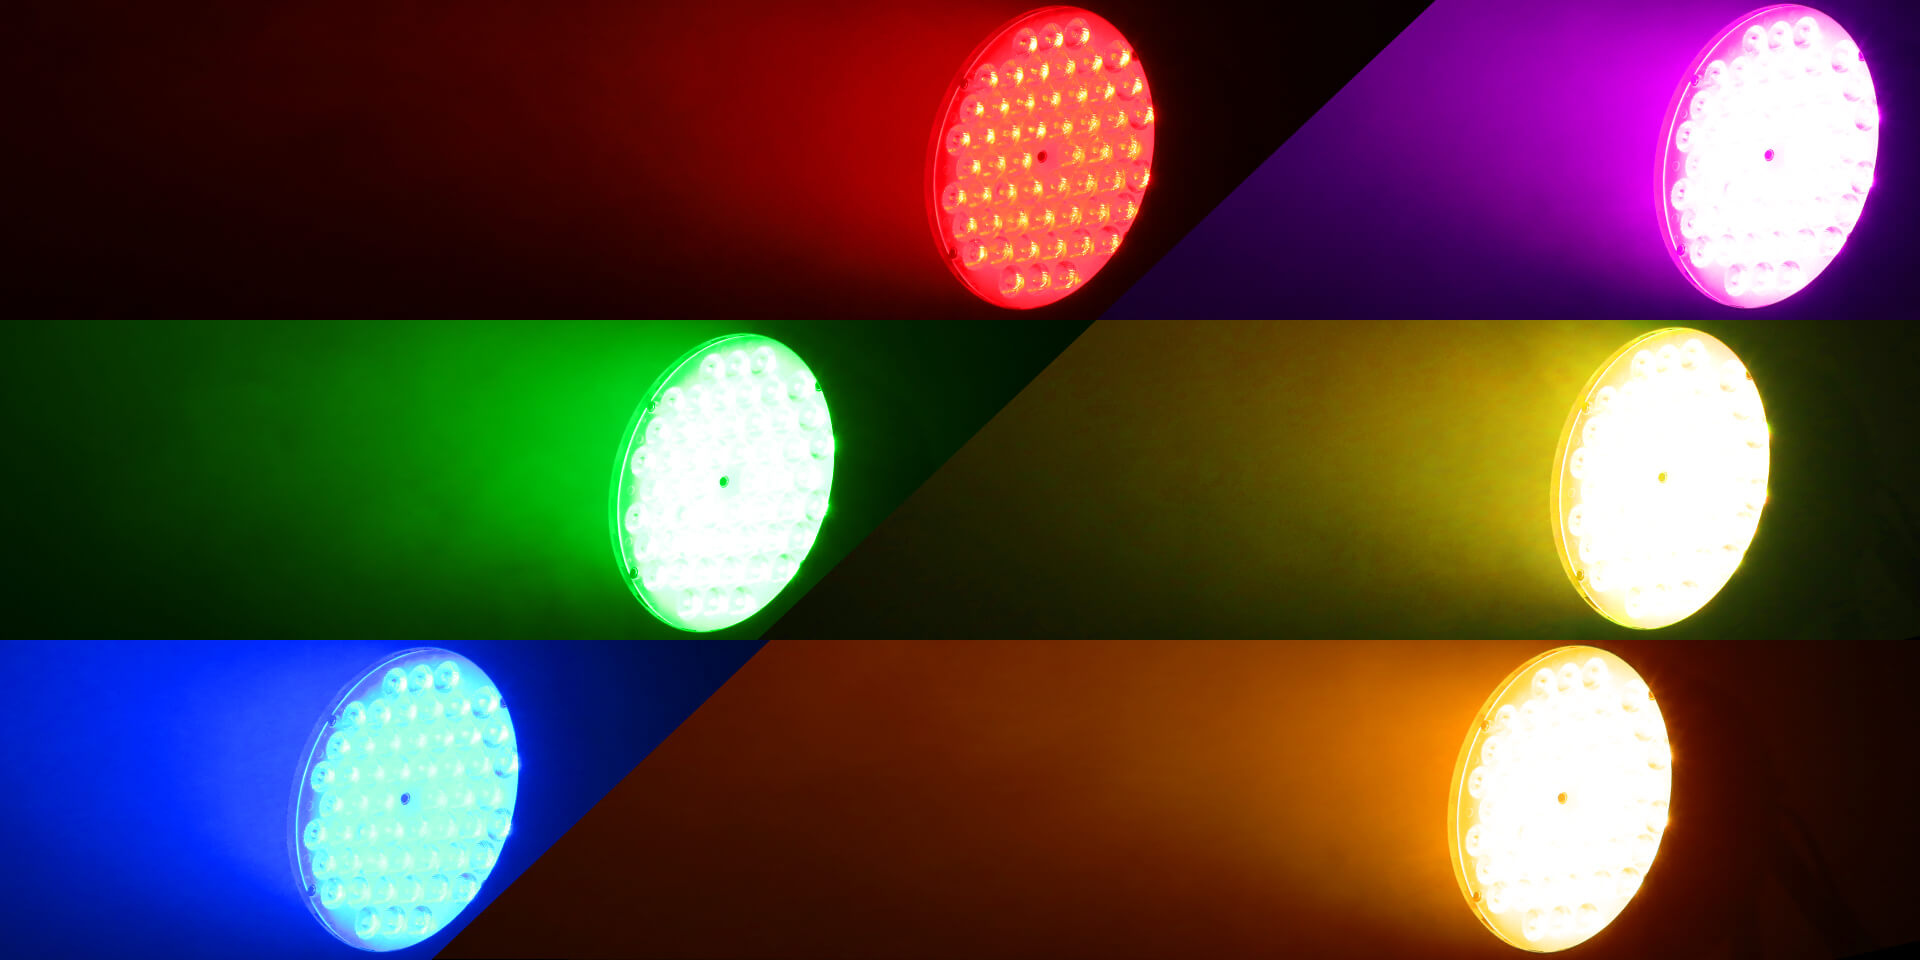 BETOPPER LED Stage Light, 54x3W RGB Par Can Light, Oman